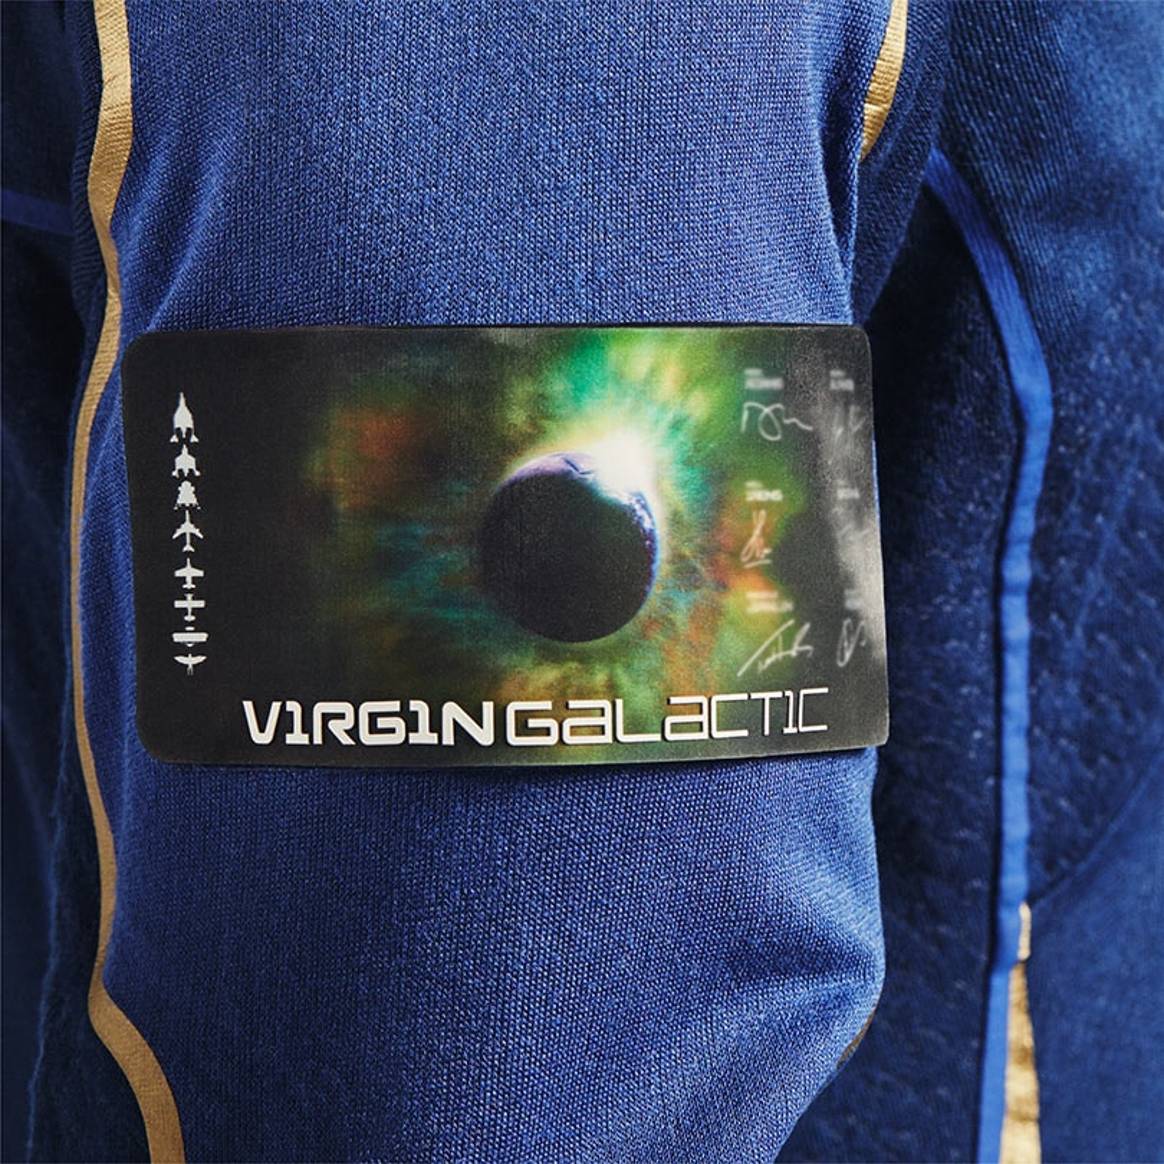 Under Armour unveils spacesuit for Virgin Galactic